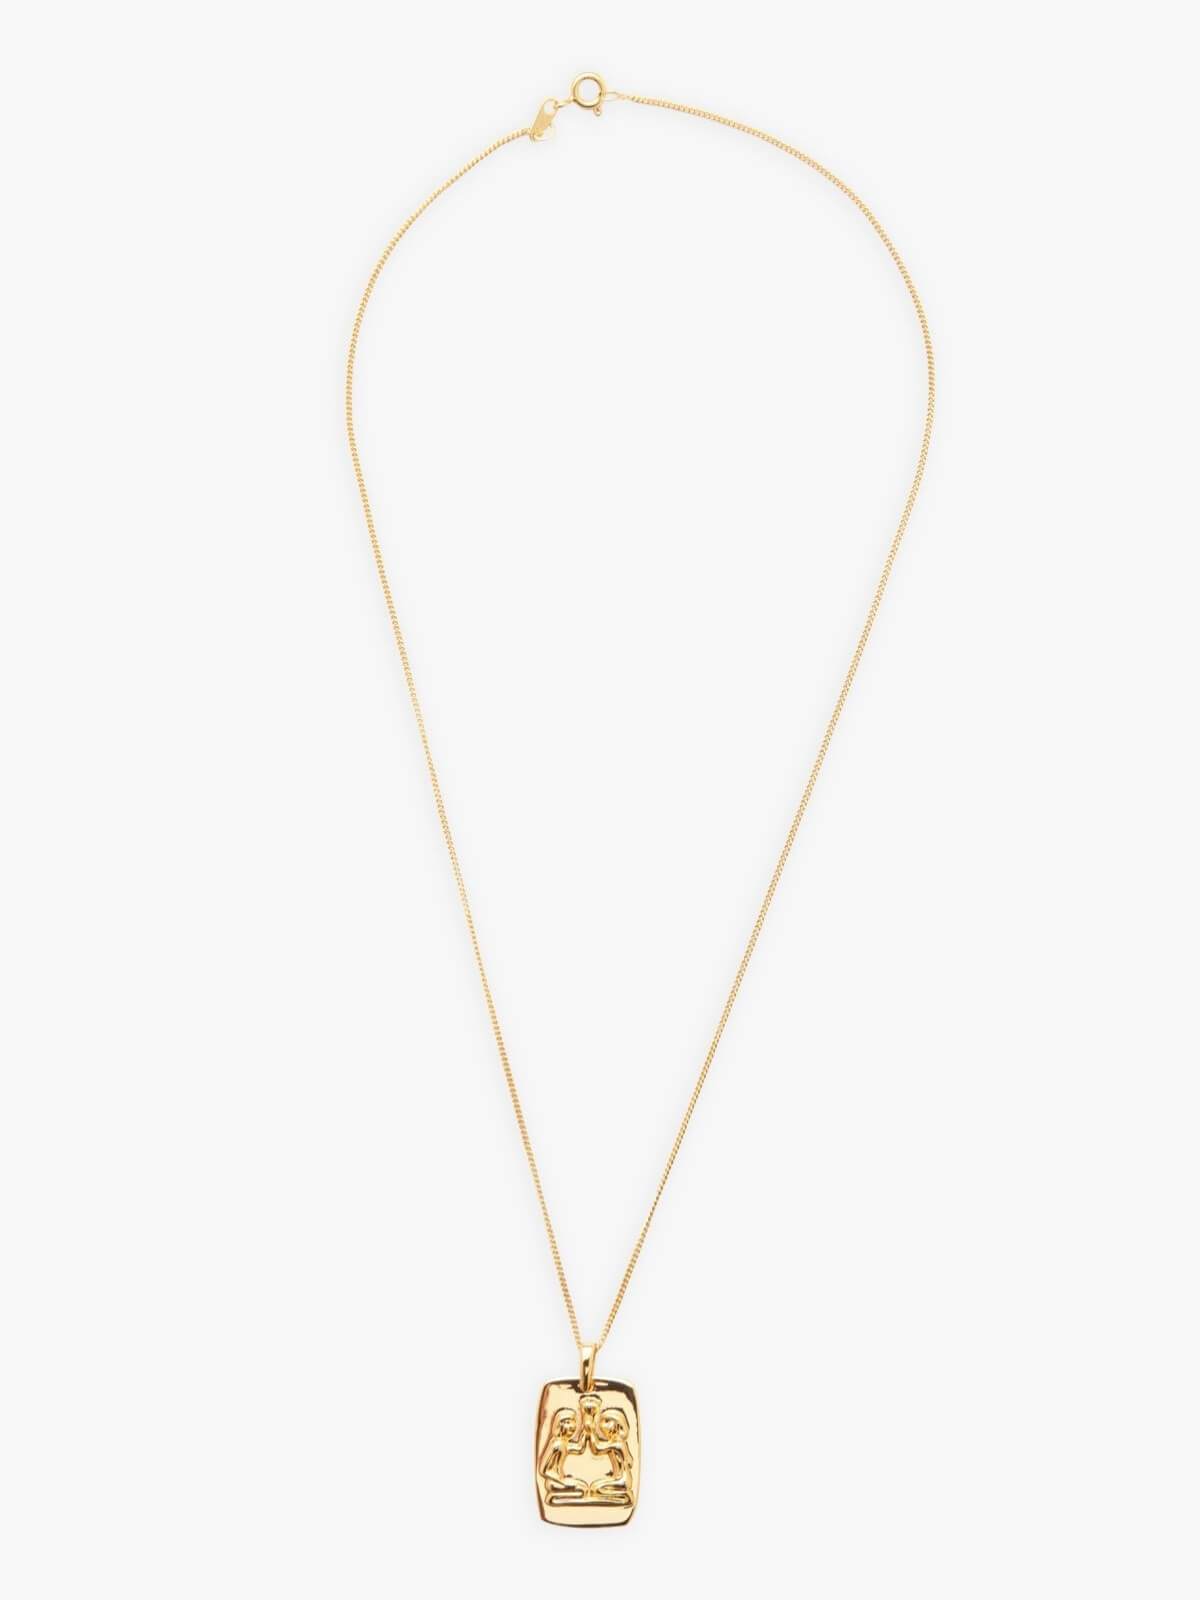 Zodiac Gemini Gold Pendant Necklaces Reliquia 